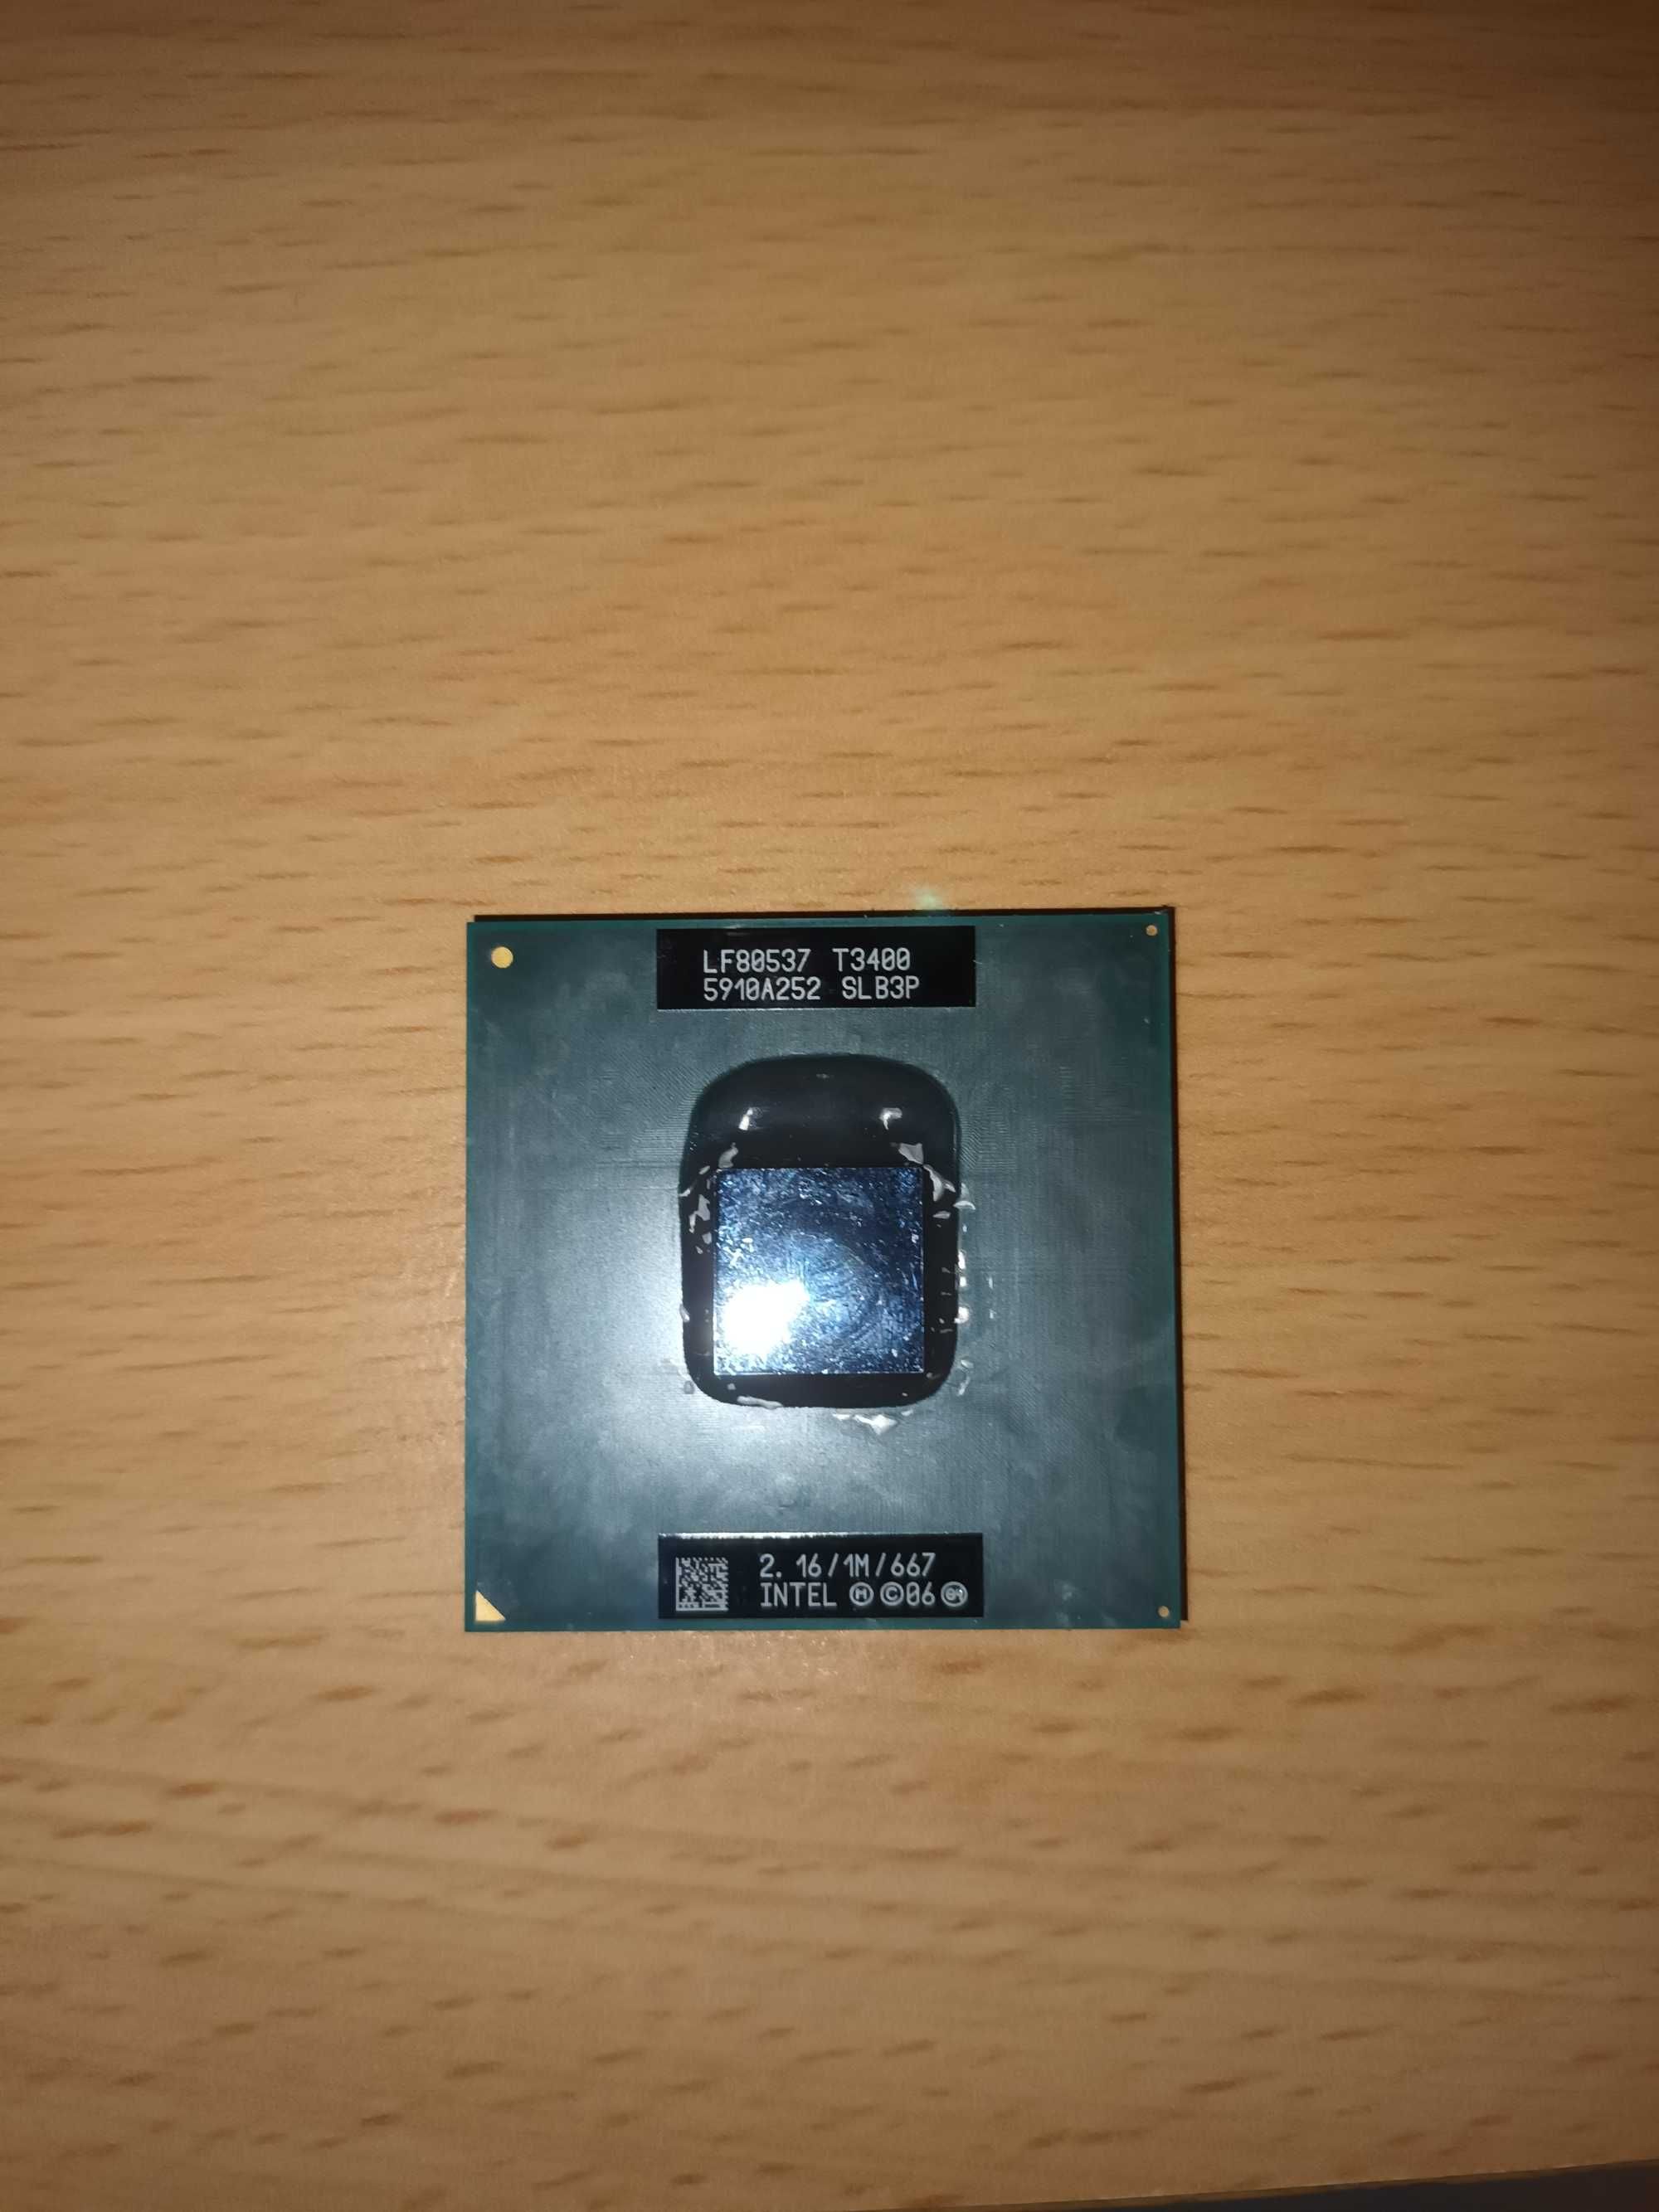 Processador Intel Pentium T3400 (2,16 GHz)